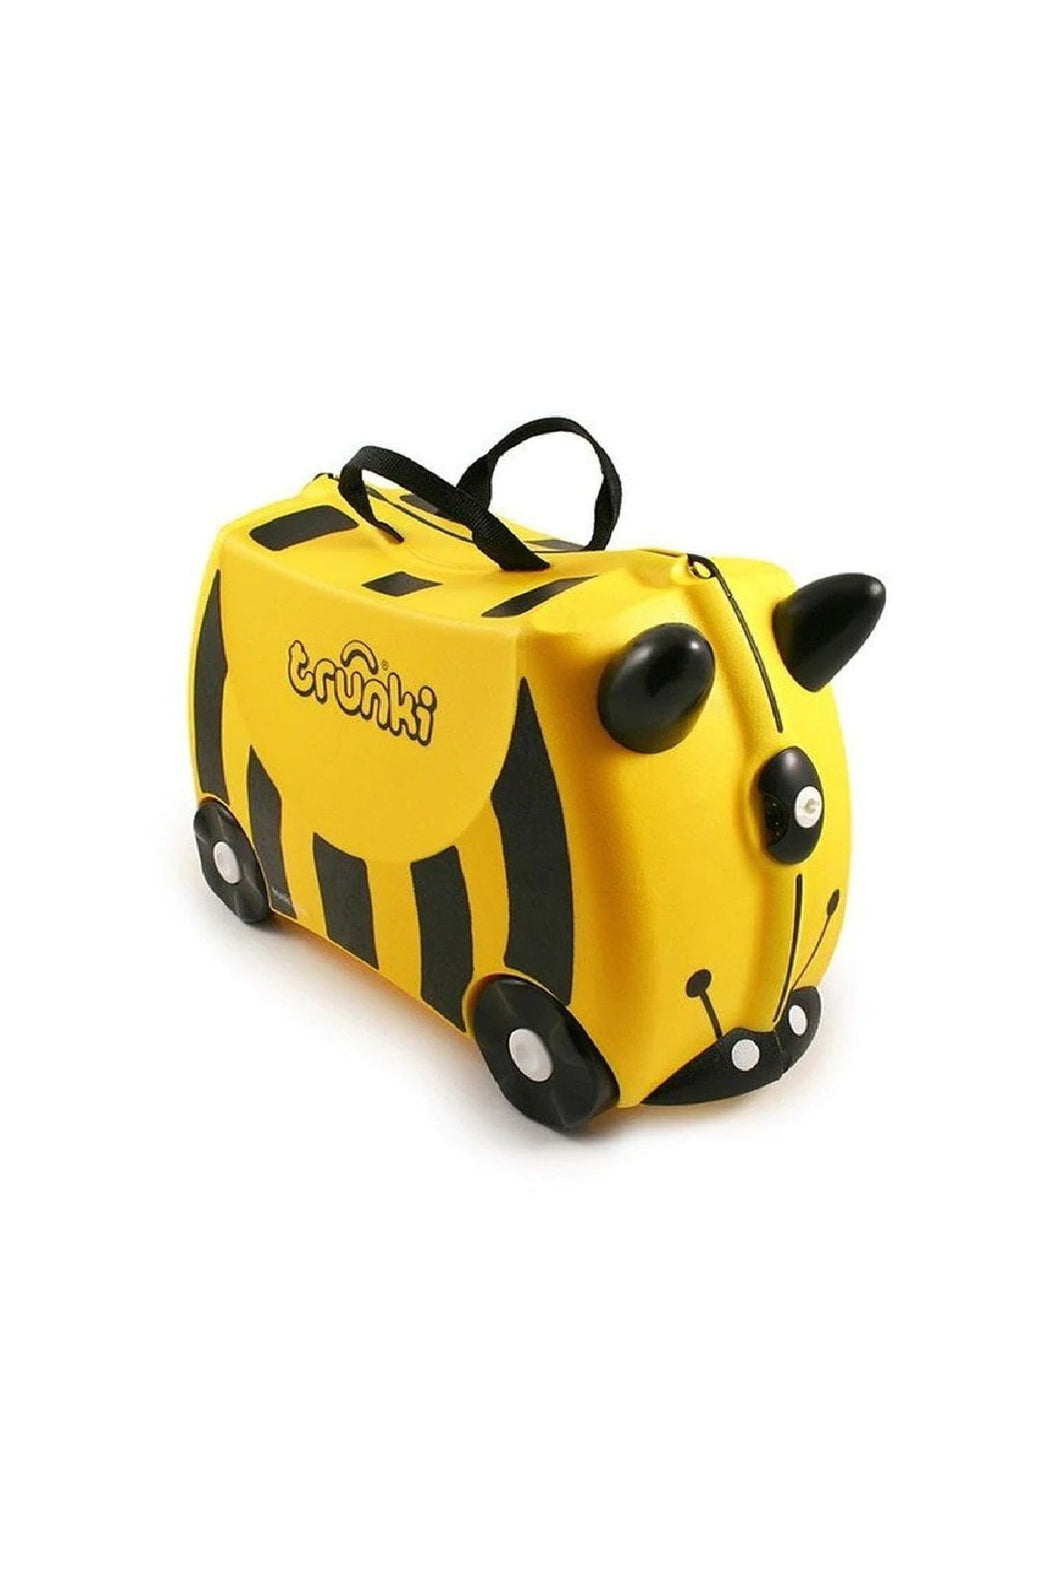 Trunki Ride On Suitcase Bernard The Bumblebee 1